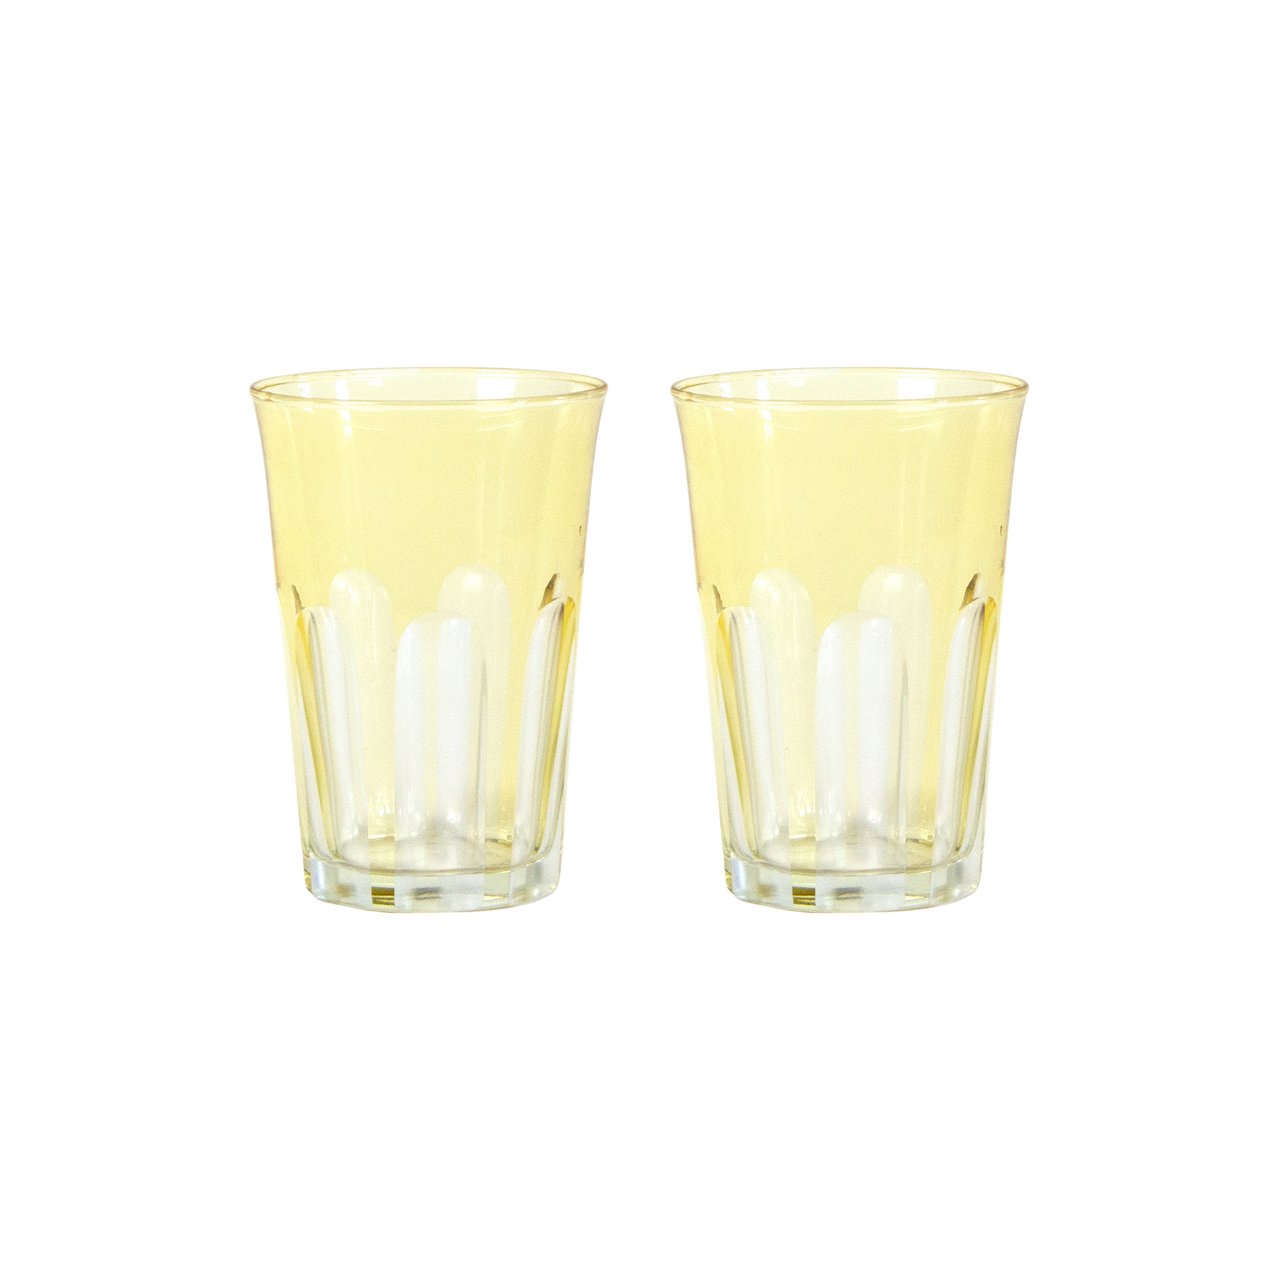 Rialto Limoncello (Light Yellow) Glasses